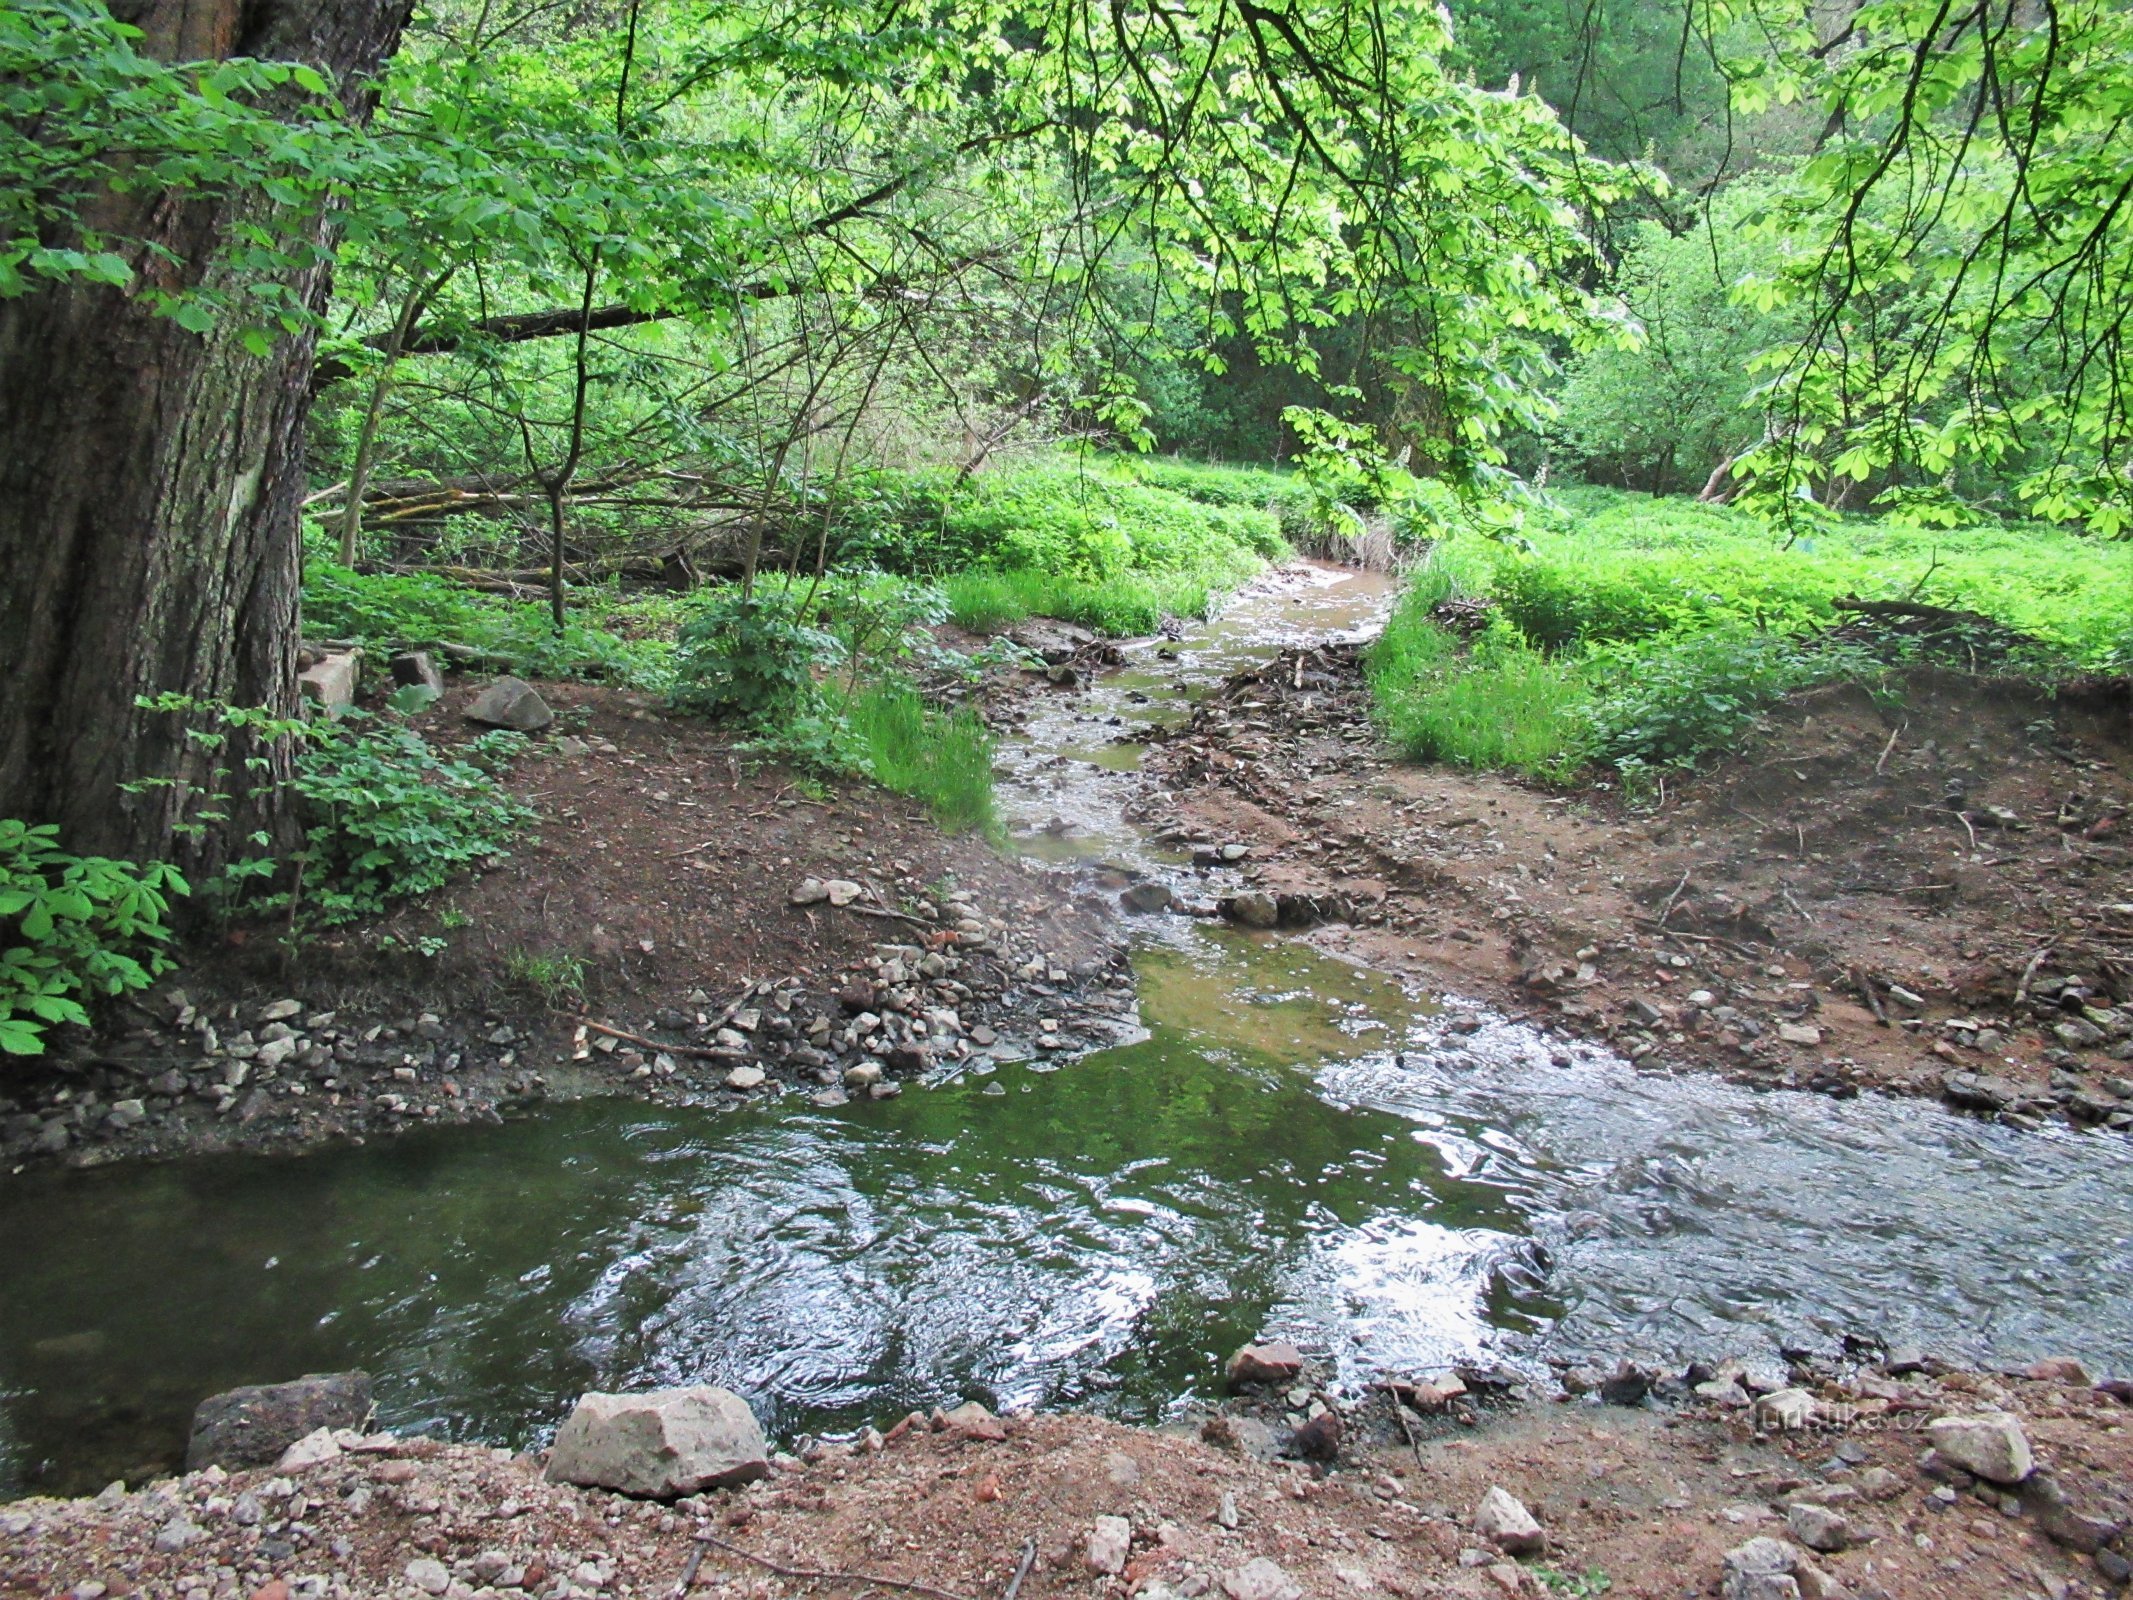 Confluence of Ponávka and Jehnické creek in spring